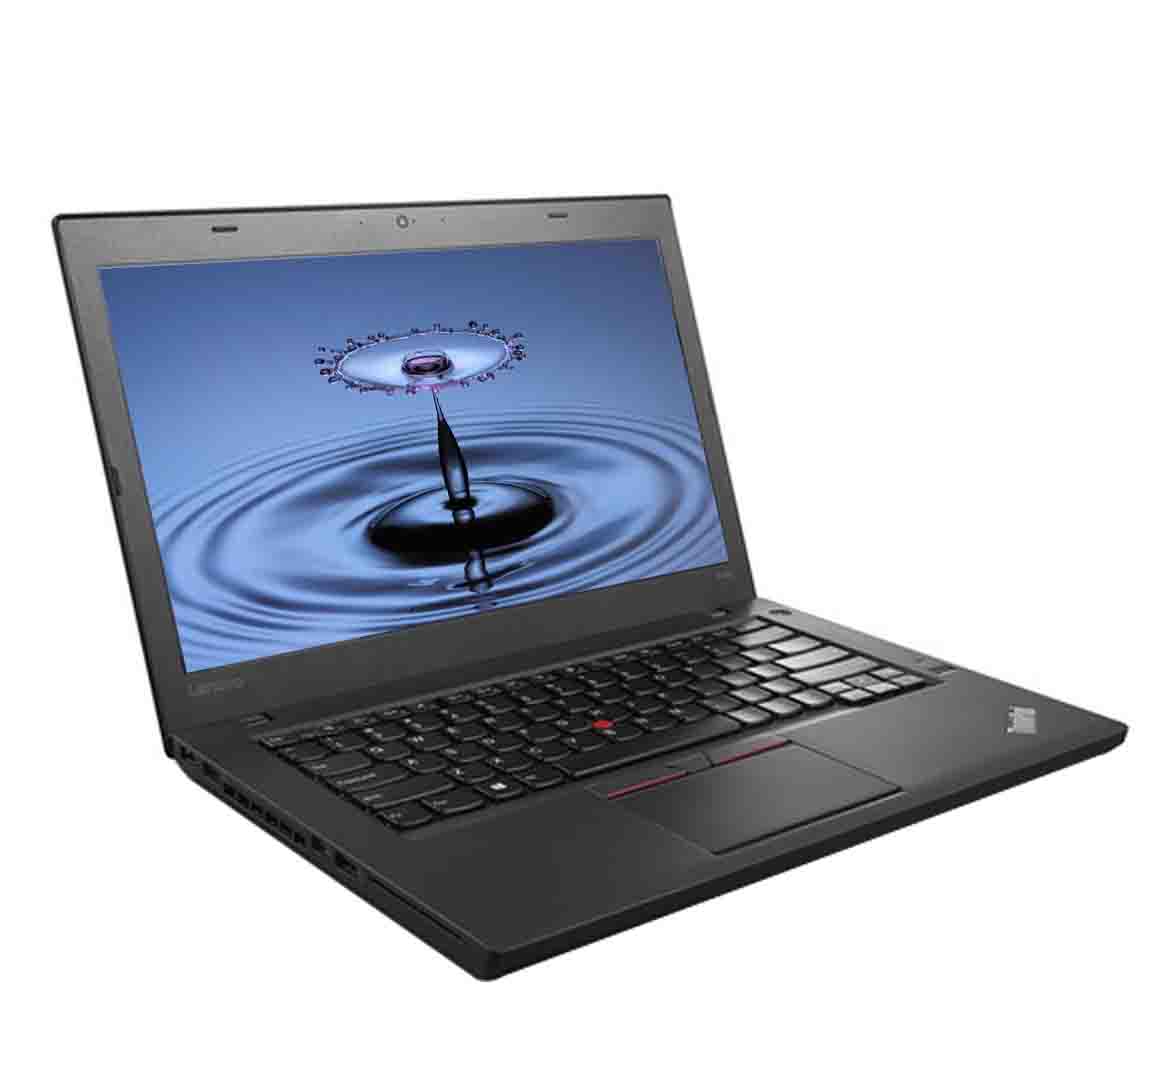 Lenovo ThinkPad T450 Business Laptop, Intel Core i5-5th Gen. CPU, 8GB RAM, 256GB SSD, 14.1 inch Display, Windows 10